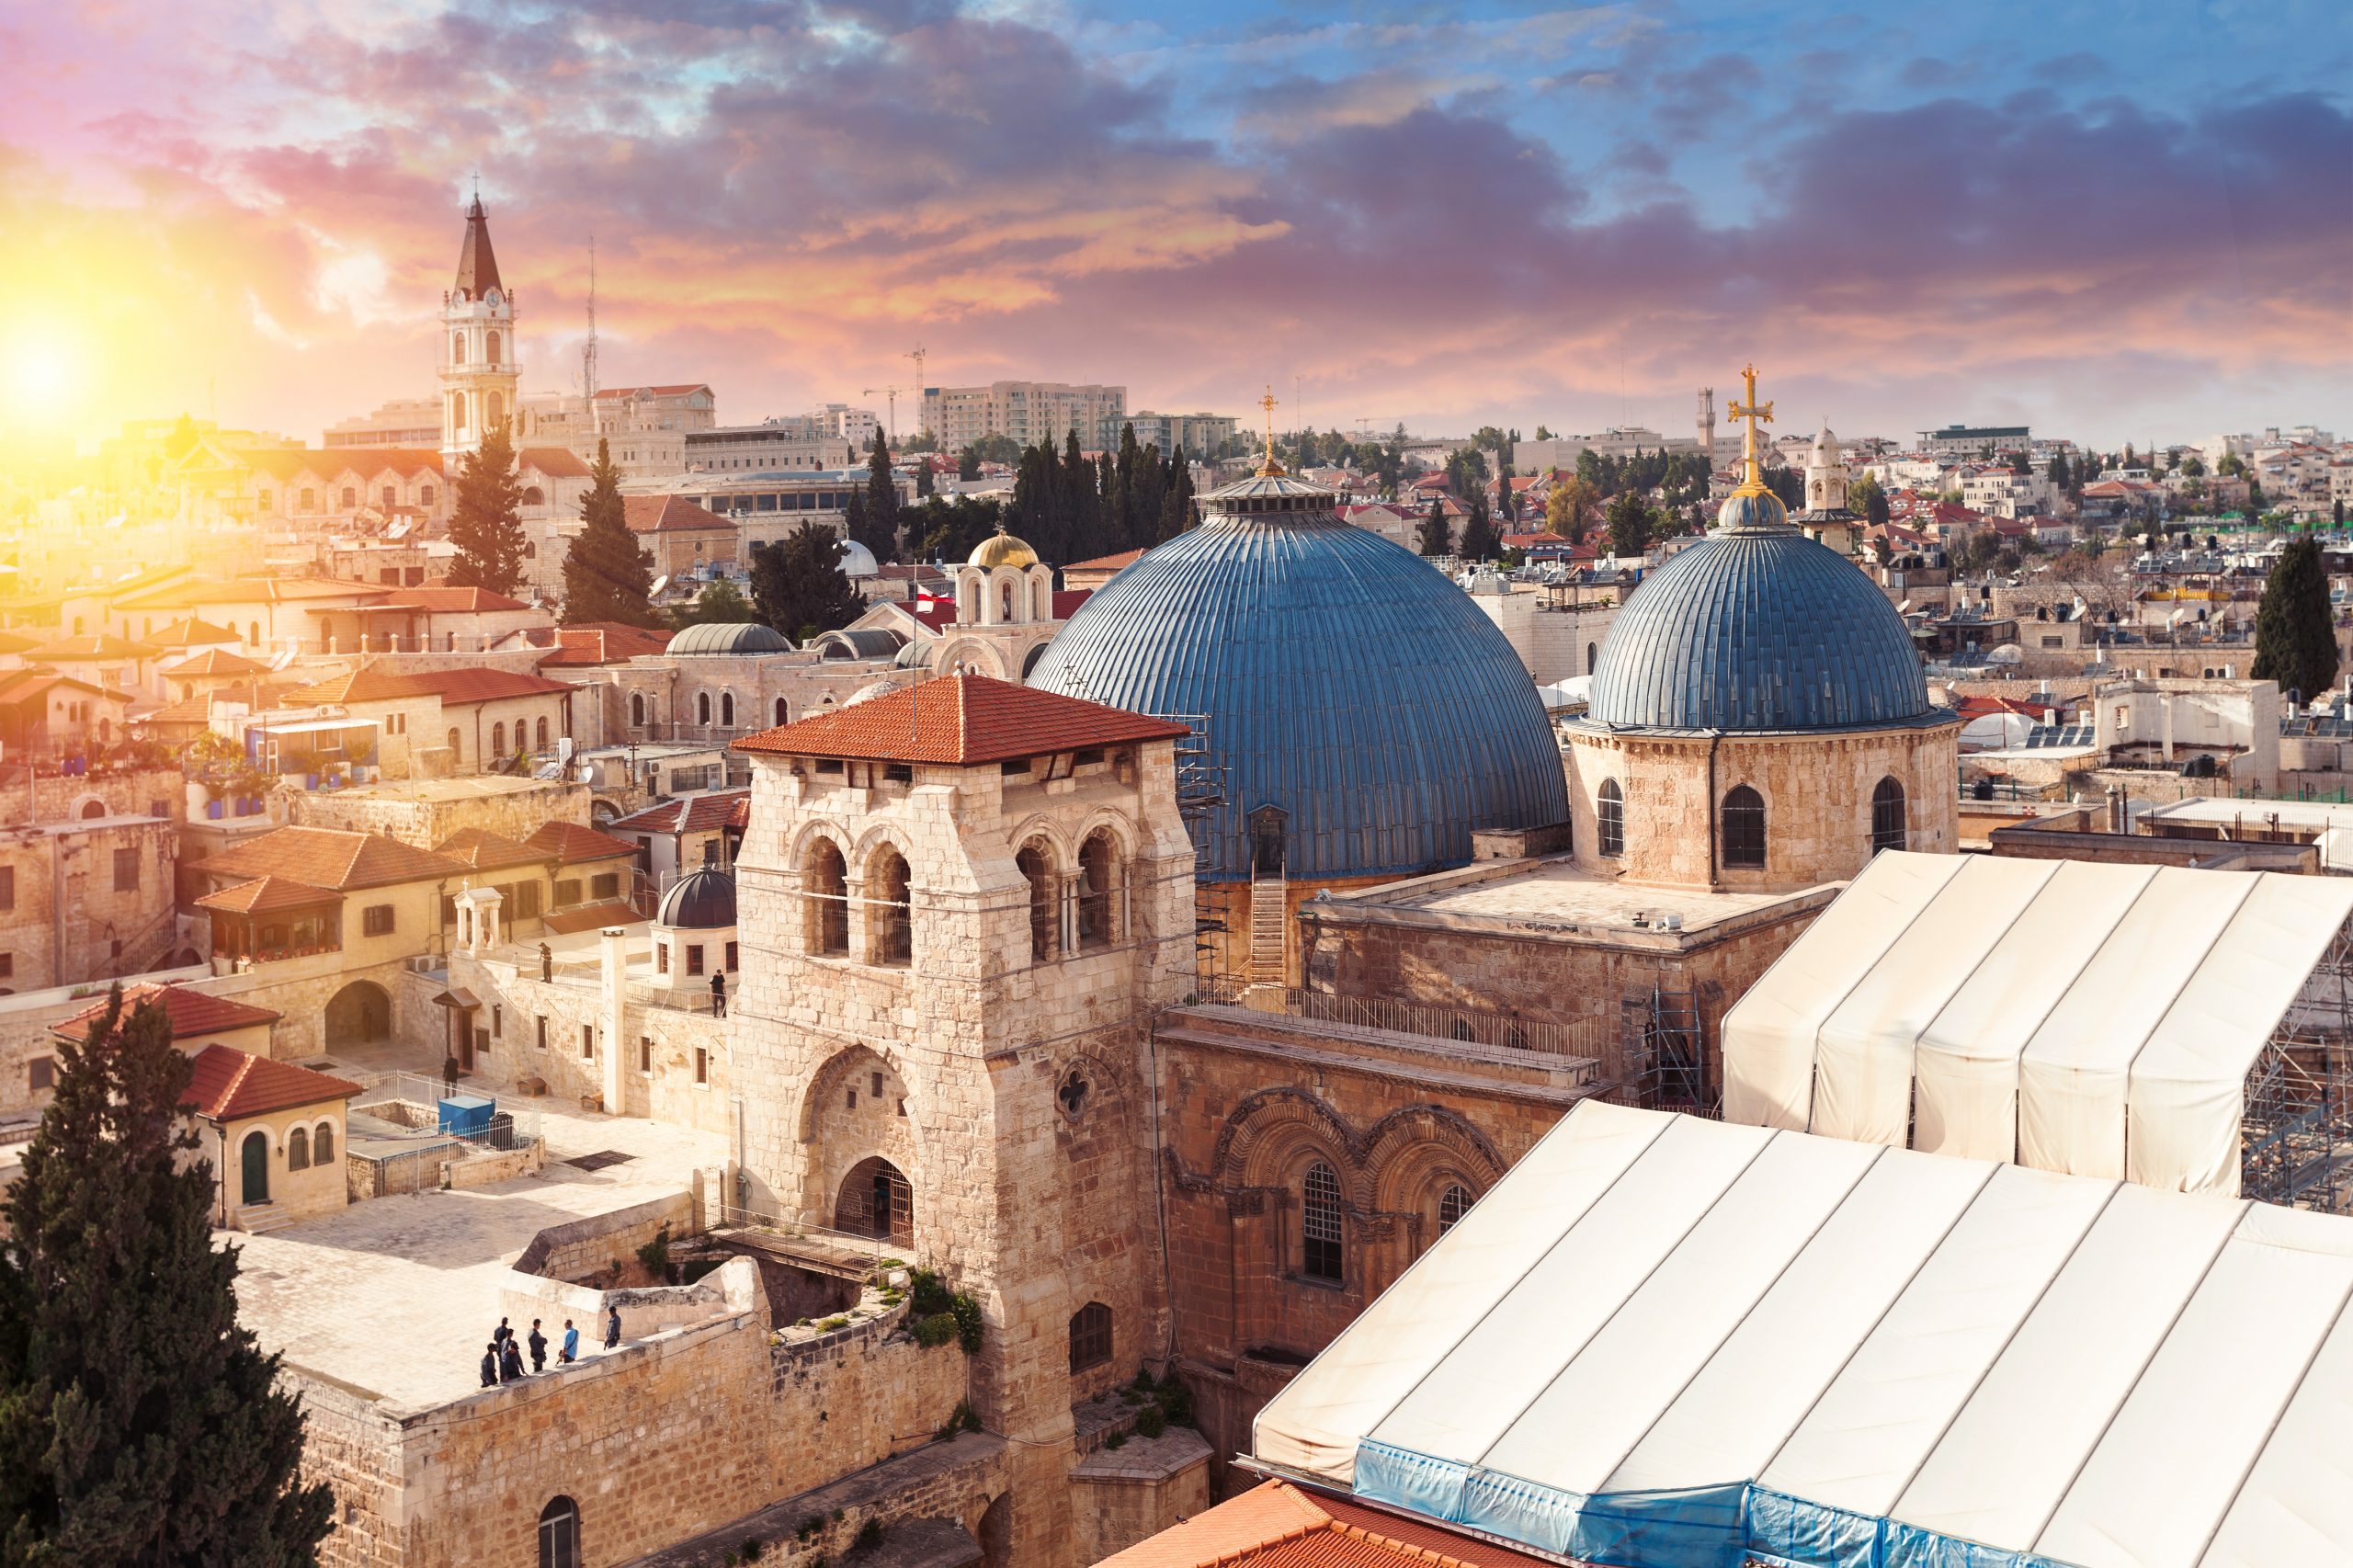 Jerusalem: Holy City for Three Faiths